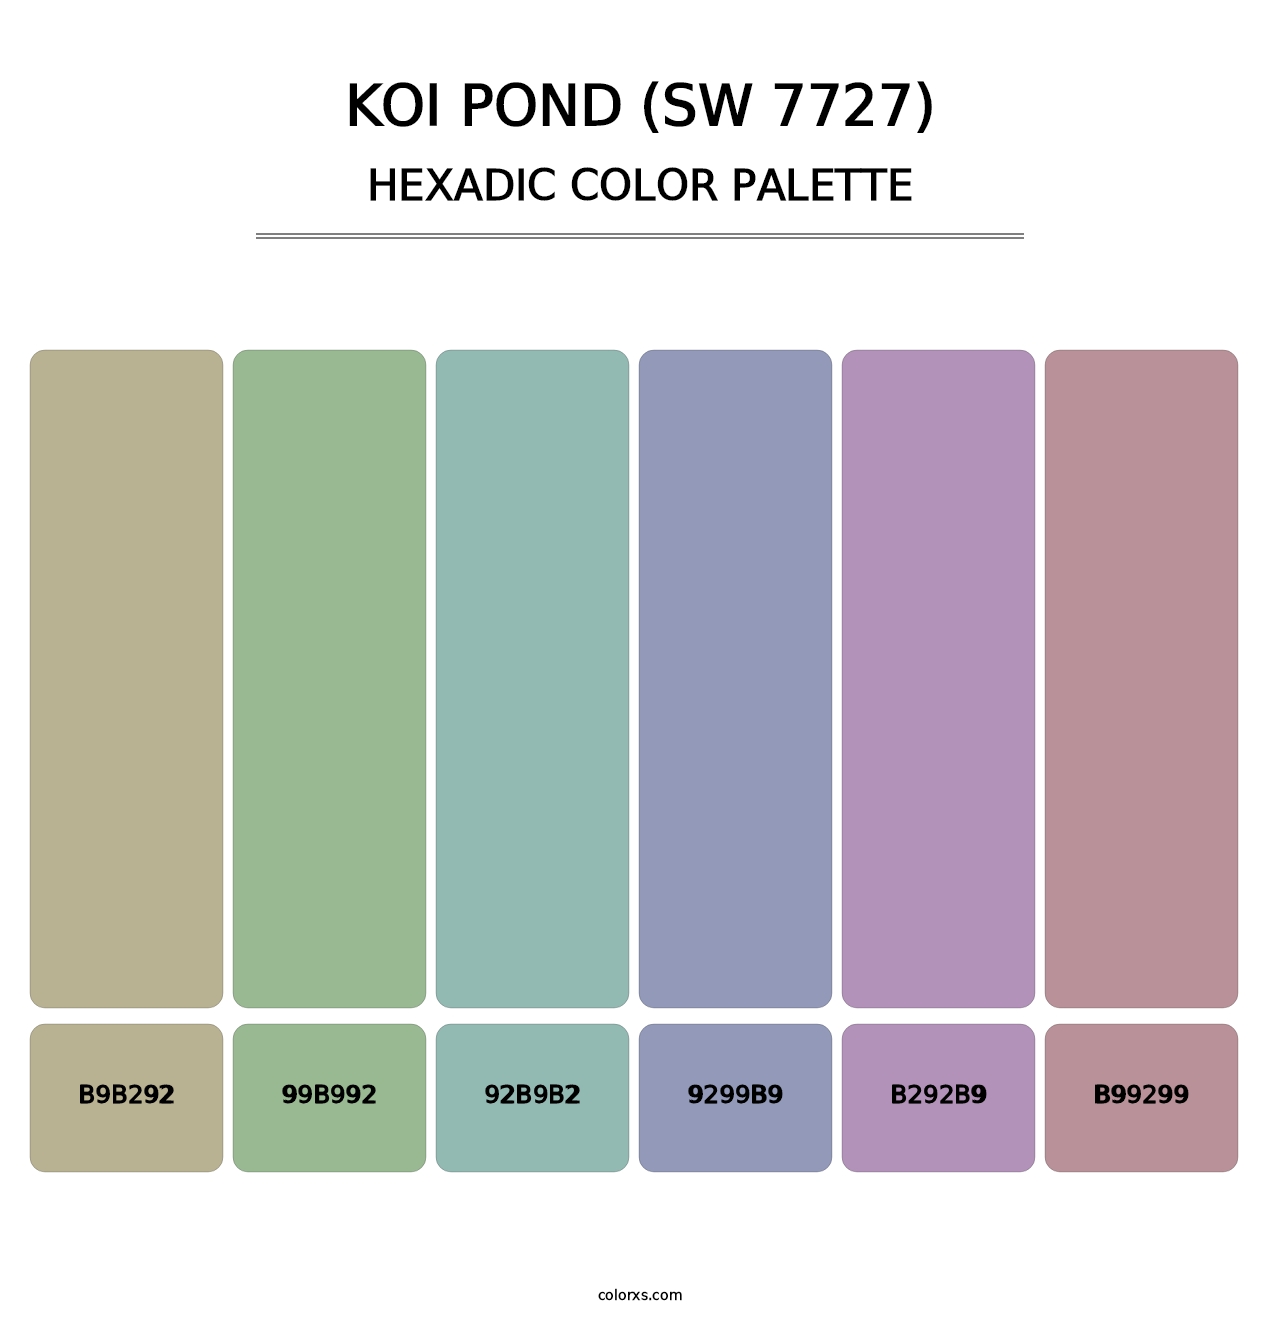 Koi Pond (SW 7727) - Hexadic Color Palette